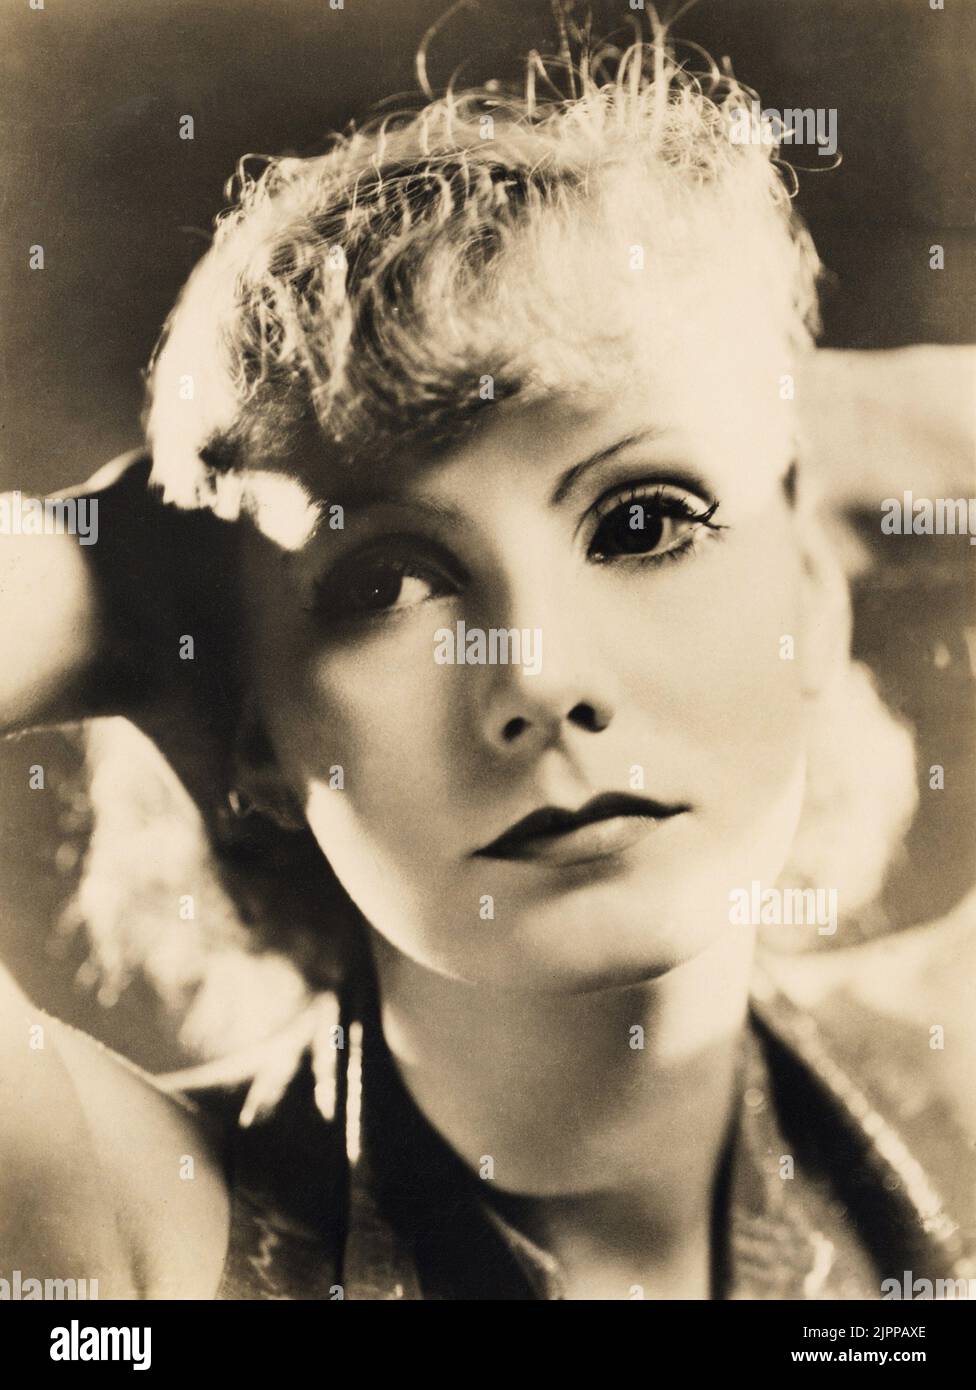 1932 , USA : The actress  GRETA GARBO ( 1905 - 1990 )  in MATA HARI by Edmund Goulding   , from a novel by  Vicki Baum   - MGM - MOVIE - FILM - CINEMA  - portrait - ritratto  - diva - divina - divine -   spia - spy  ----  Archivio GBB Stock Photo